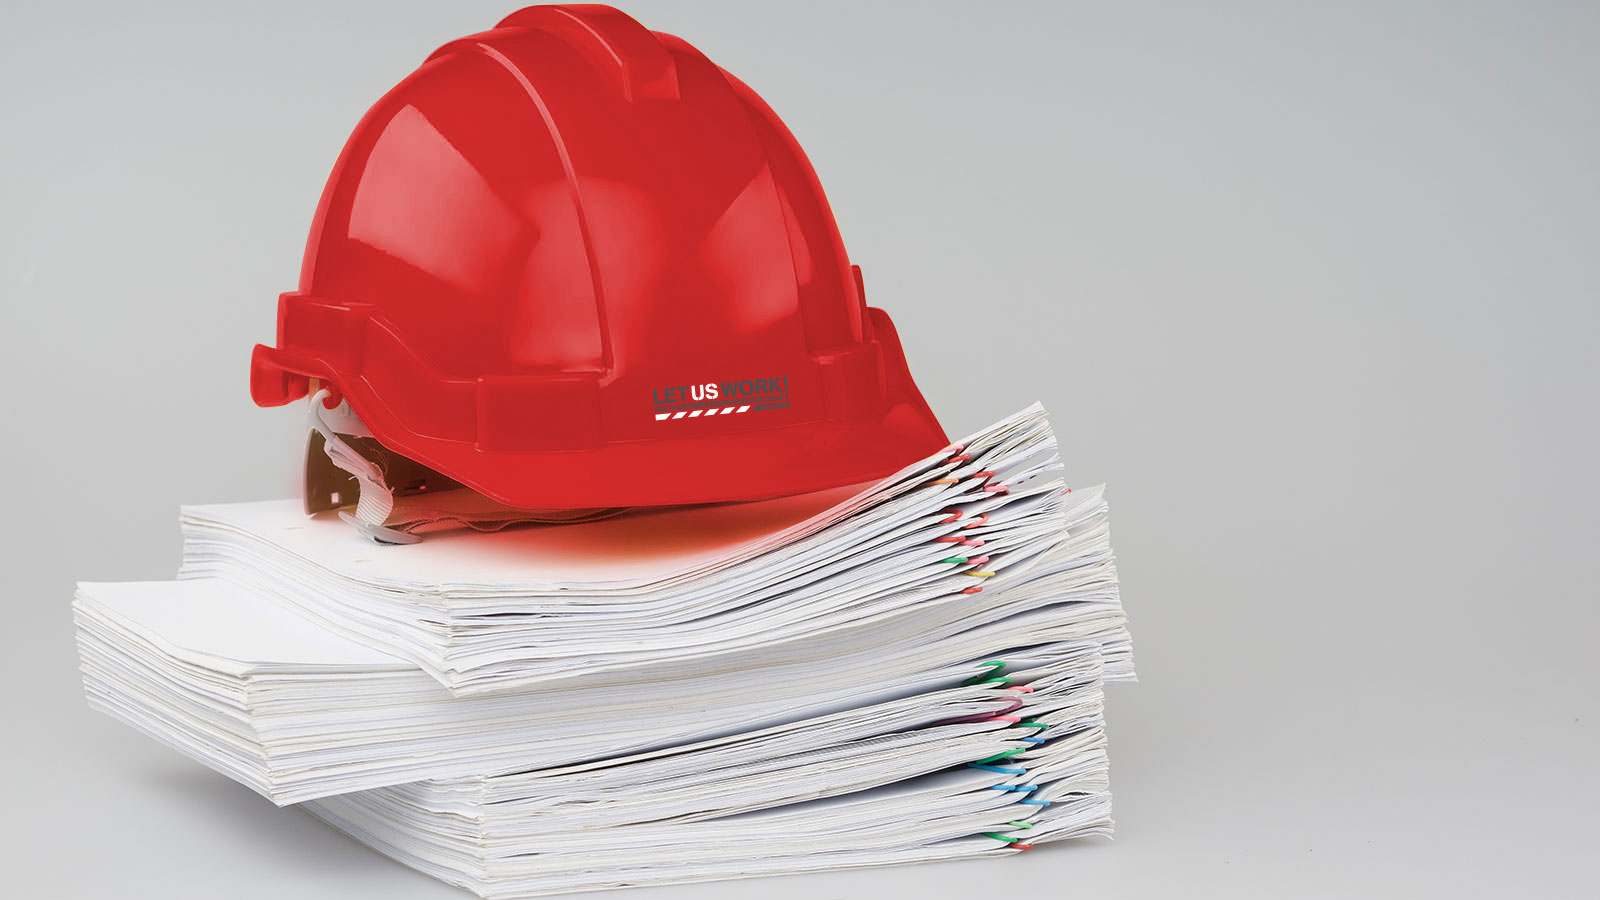 Regulations with red helmet